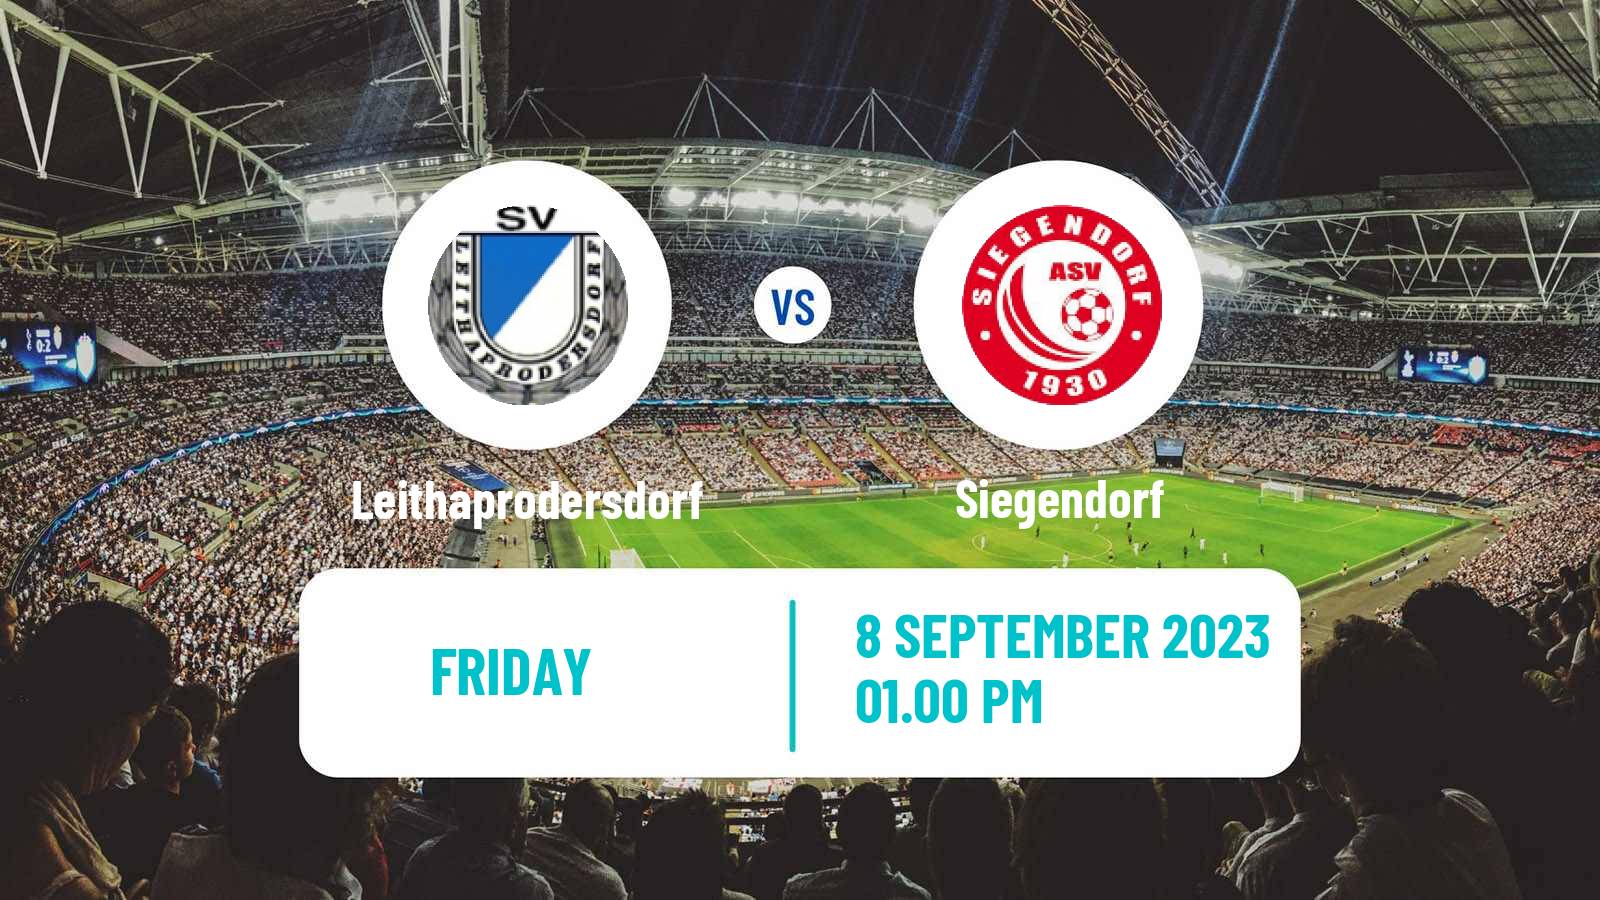 Soccer Austrian Landesliga Burgenland Leithaprodersdorf - Siegendorf